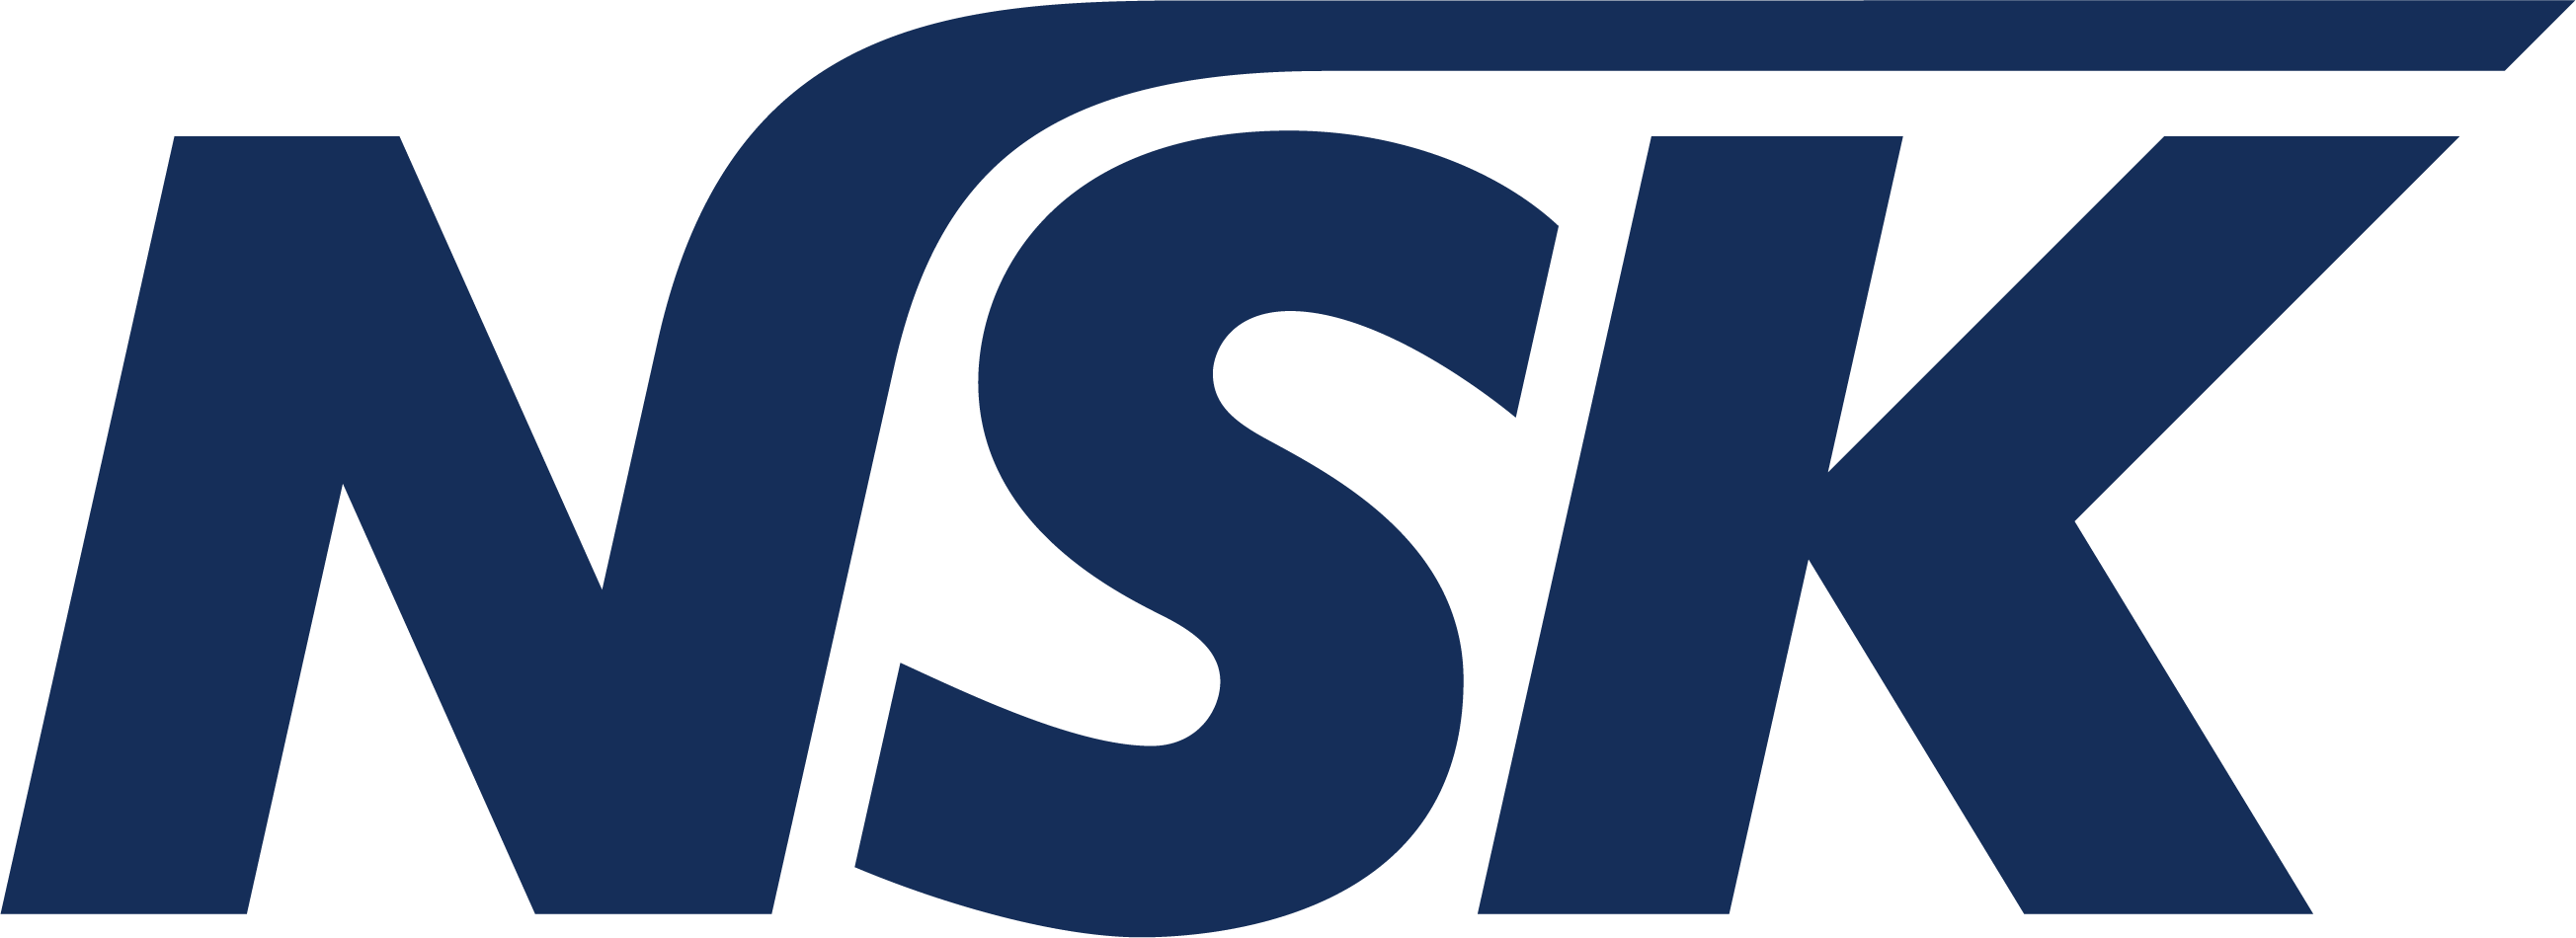 Подшипники NSK logo. NSK Nakanishi. NSK логотип стоматология. NSK бренд логотип.